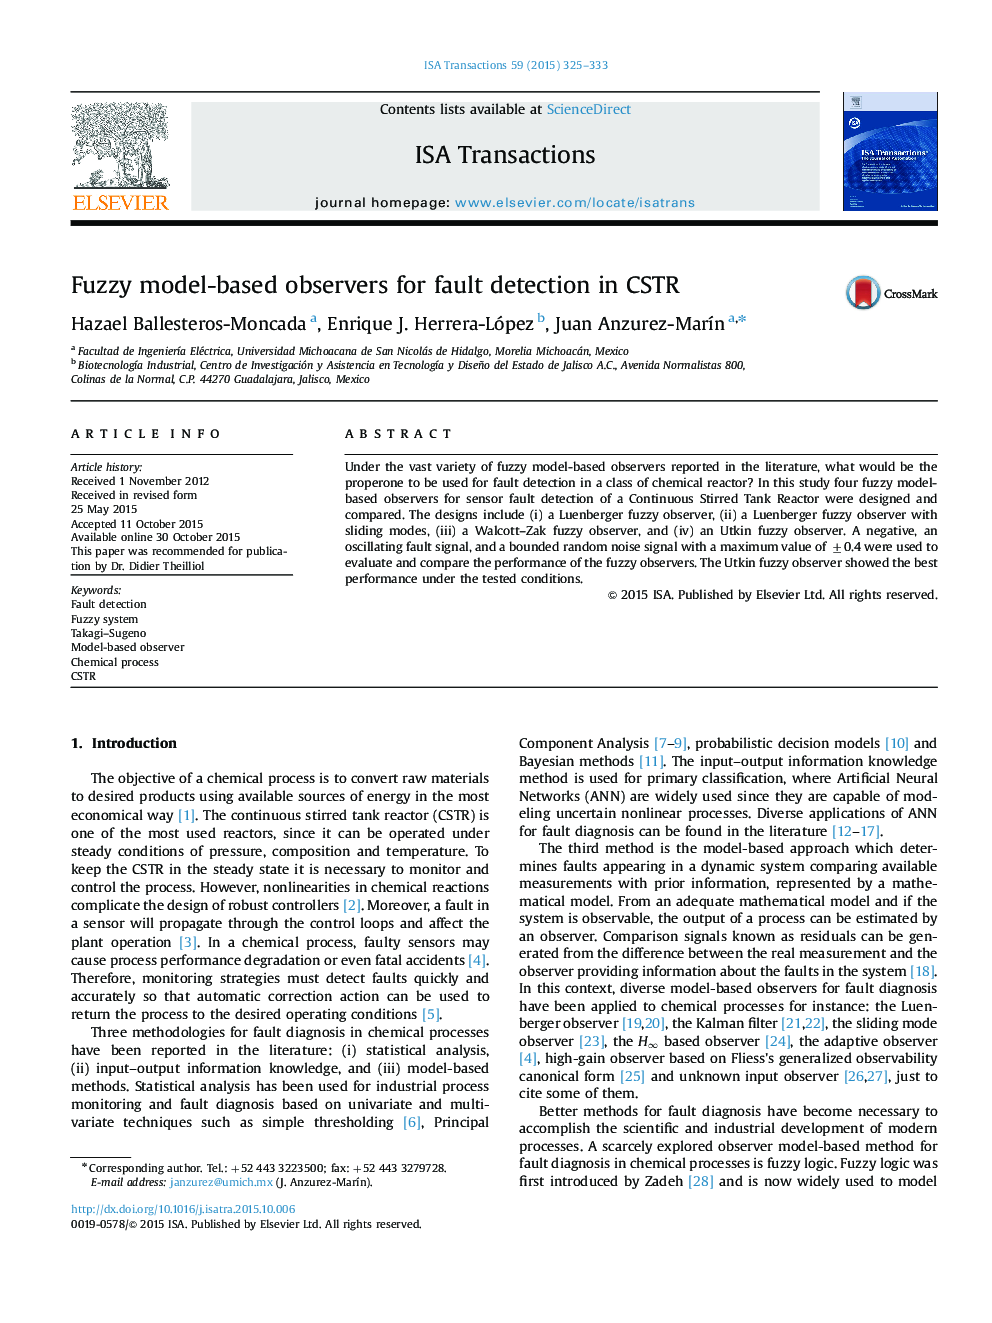 Fuzzy model-based observers for fault detection in CSTR